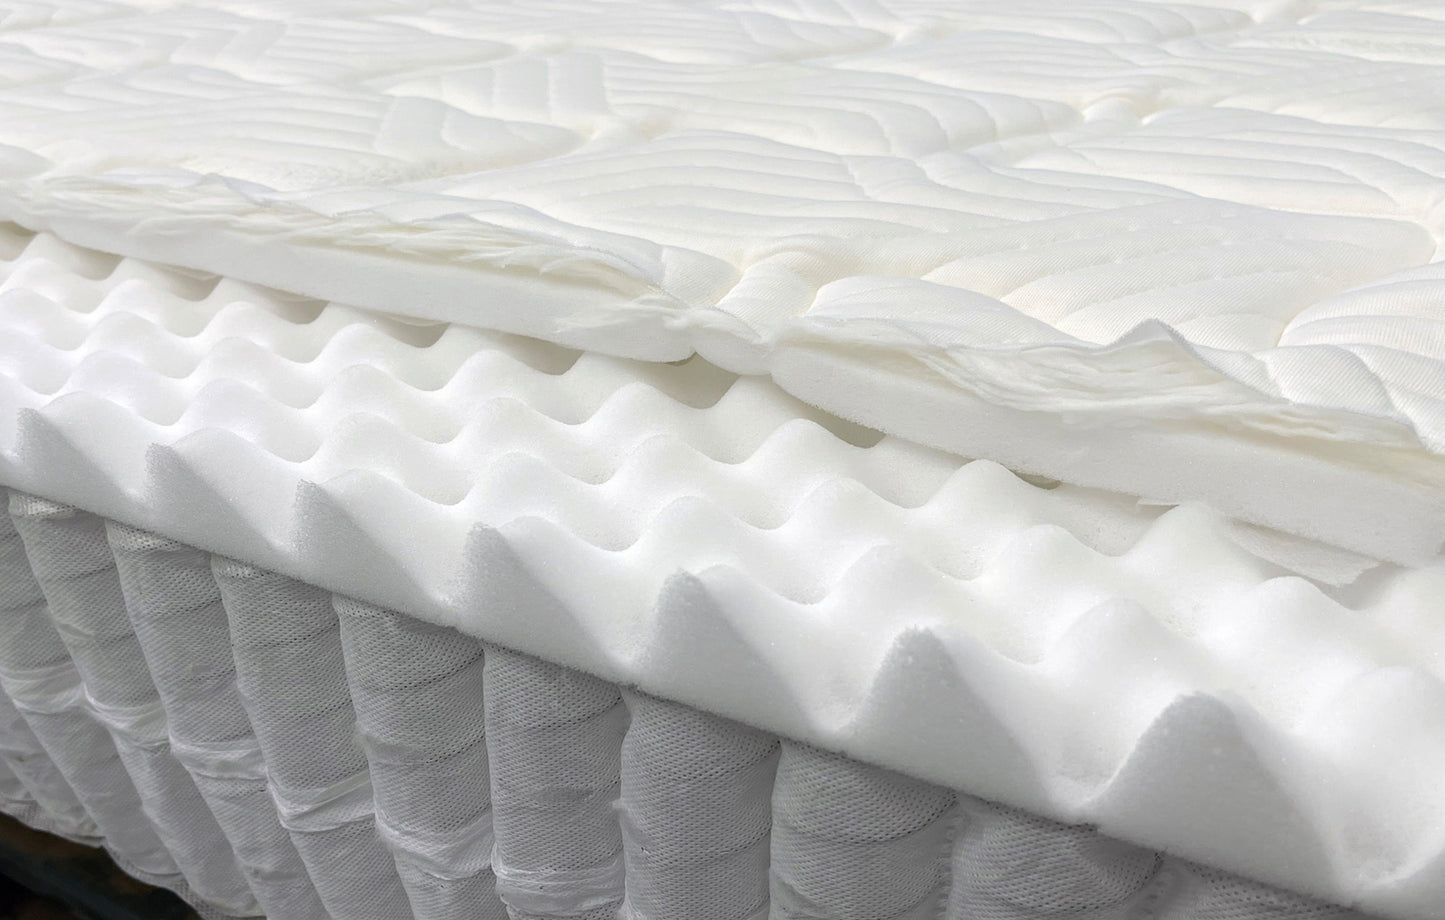 Clearwater - Medium, custom mattress